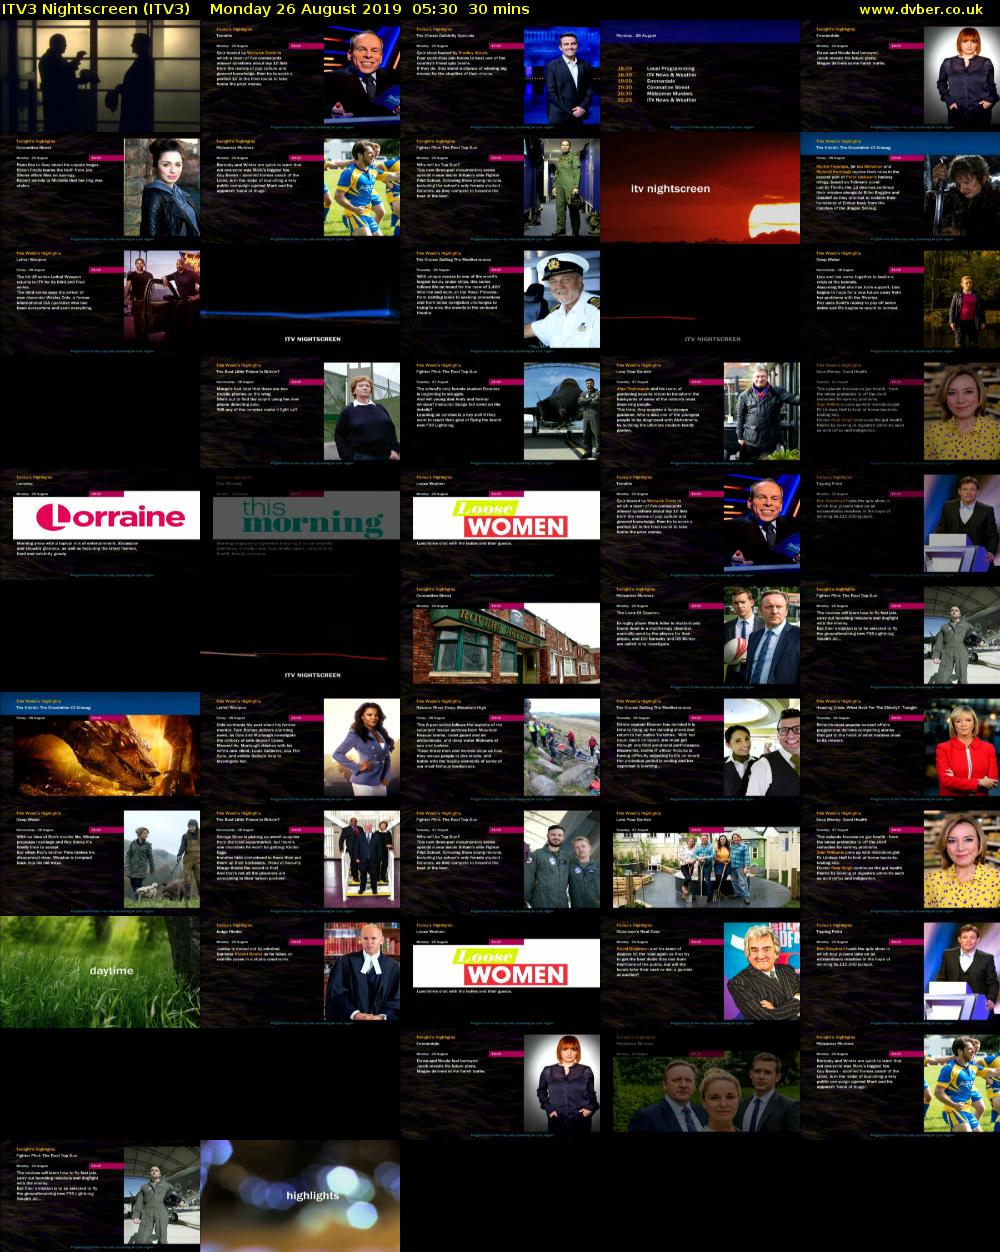 ITV3 Nightscreen (ITV3) Monday 26 August 2019 05:30 - 06:00